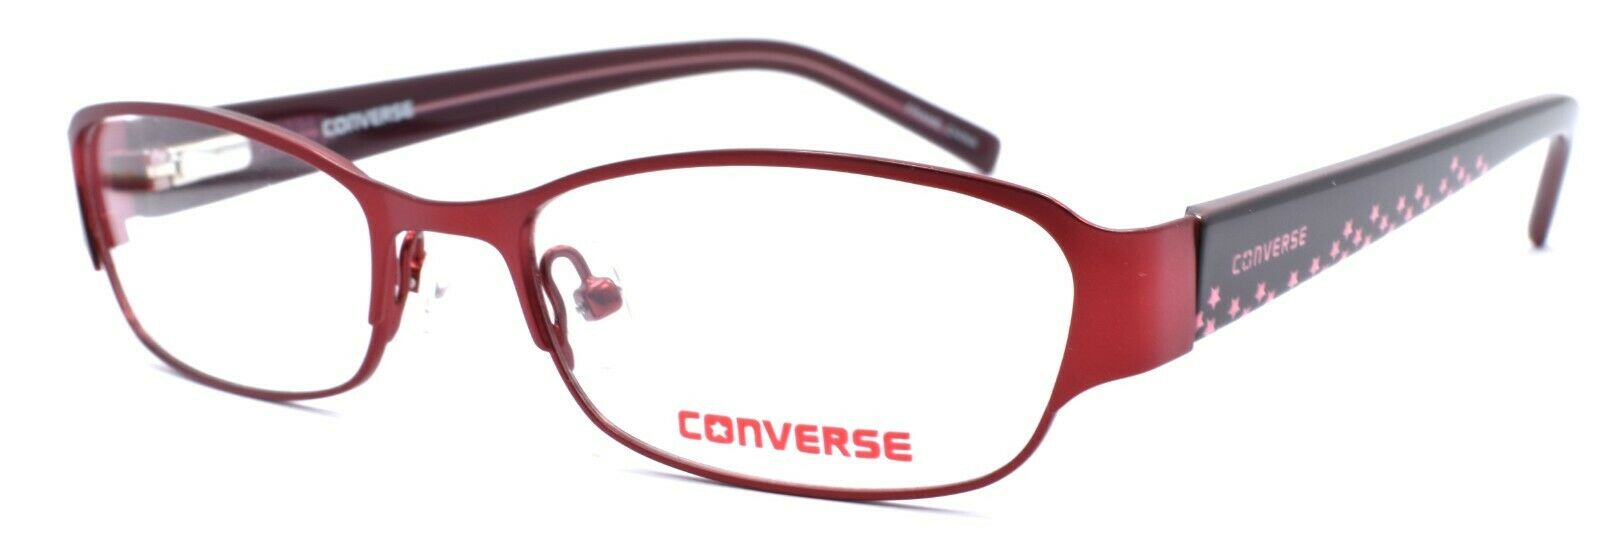 1-CONVERSE K006 Kids Girls Eyeglasses Frames 49-17-135 Red + CASE-751286247404-IKSpecs